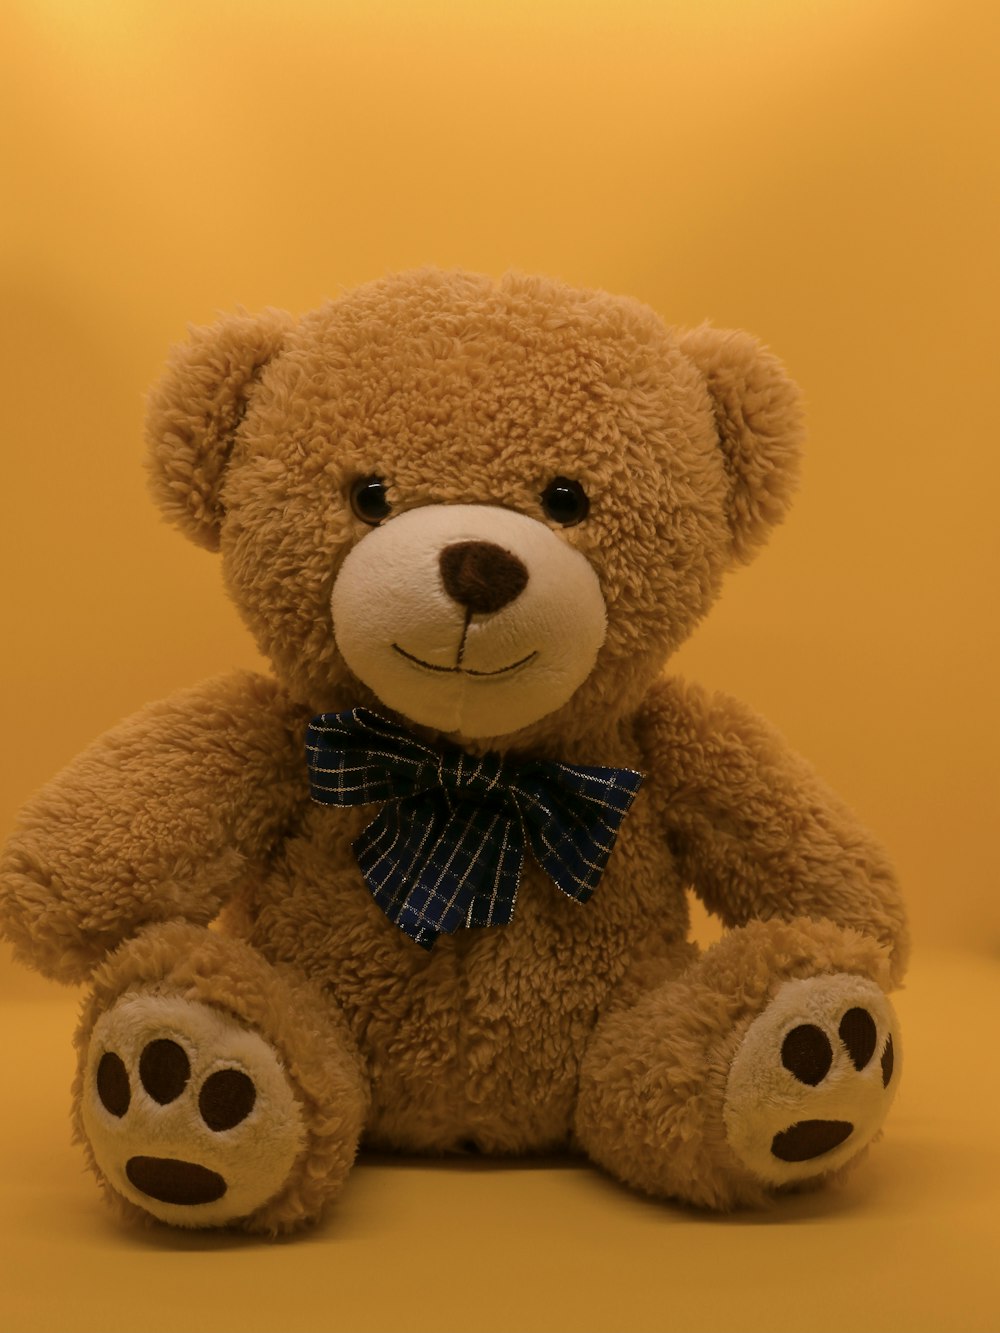 Bear wallpaper teddy